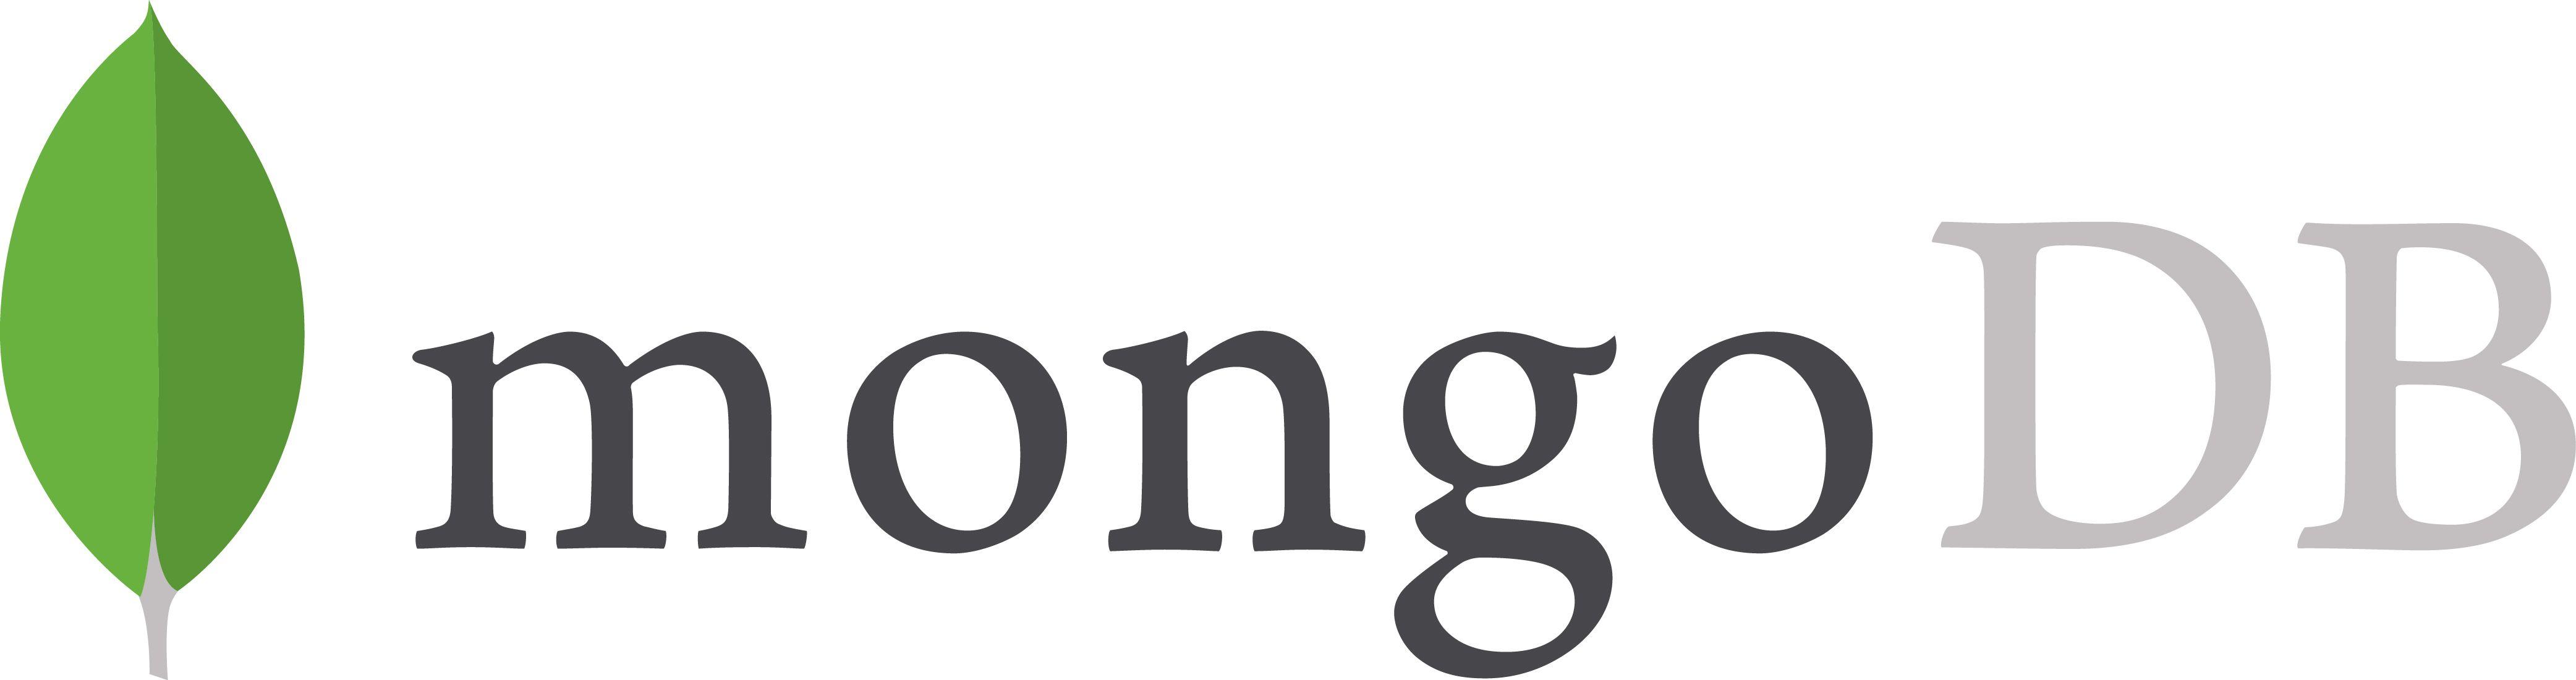 DB Logo - Brand Resources | MongoDB